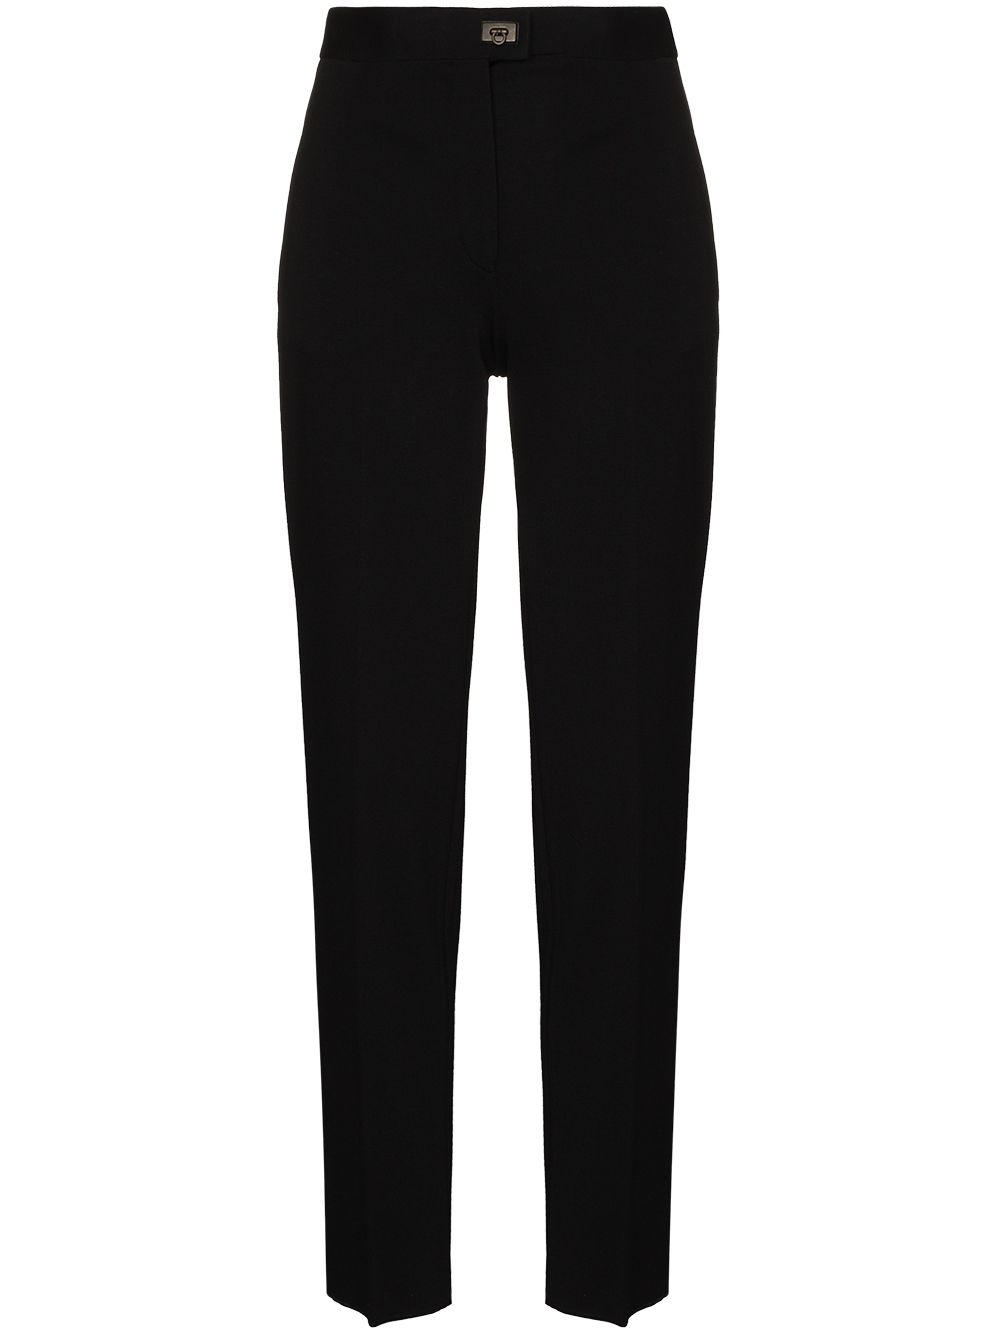 Ferragamo high-waist tailored trousers - Black